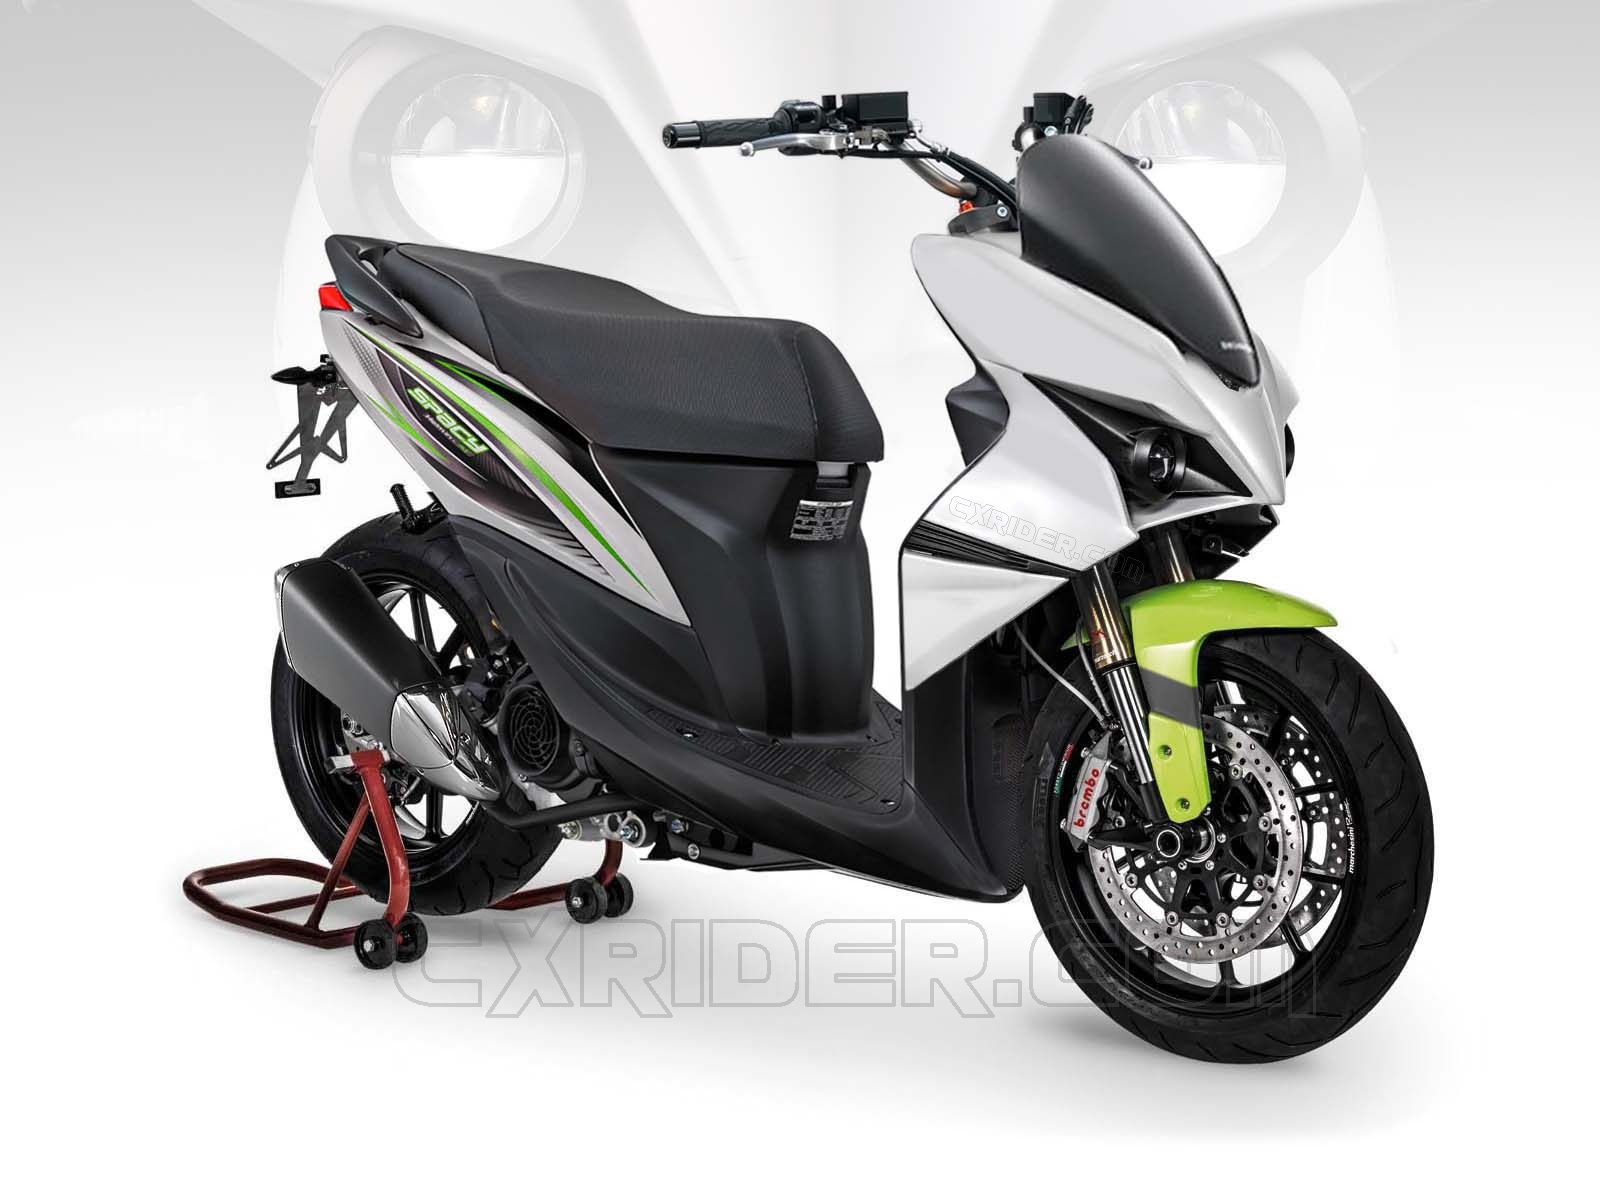 Cxridercom Konsep Modifikasi Honda Spacy Ego Matic Cxridercom